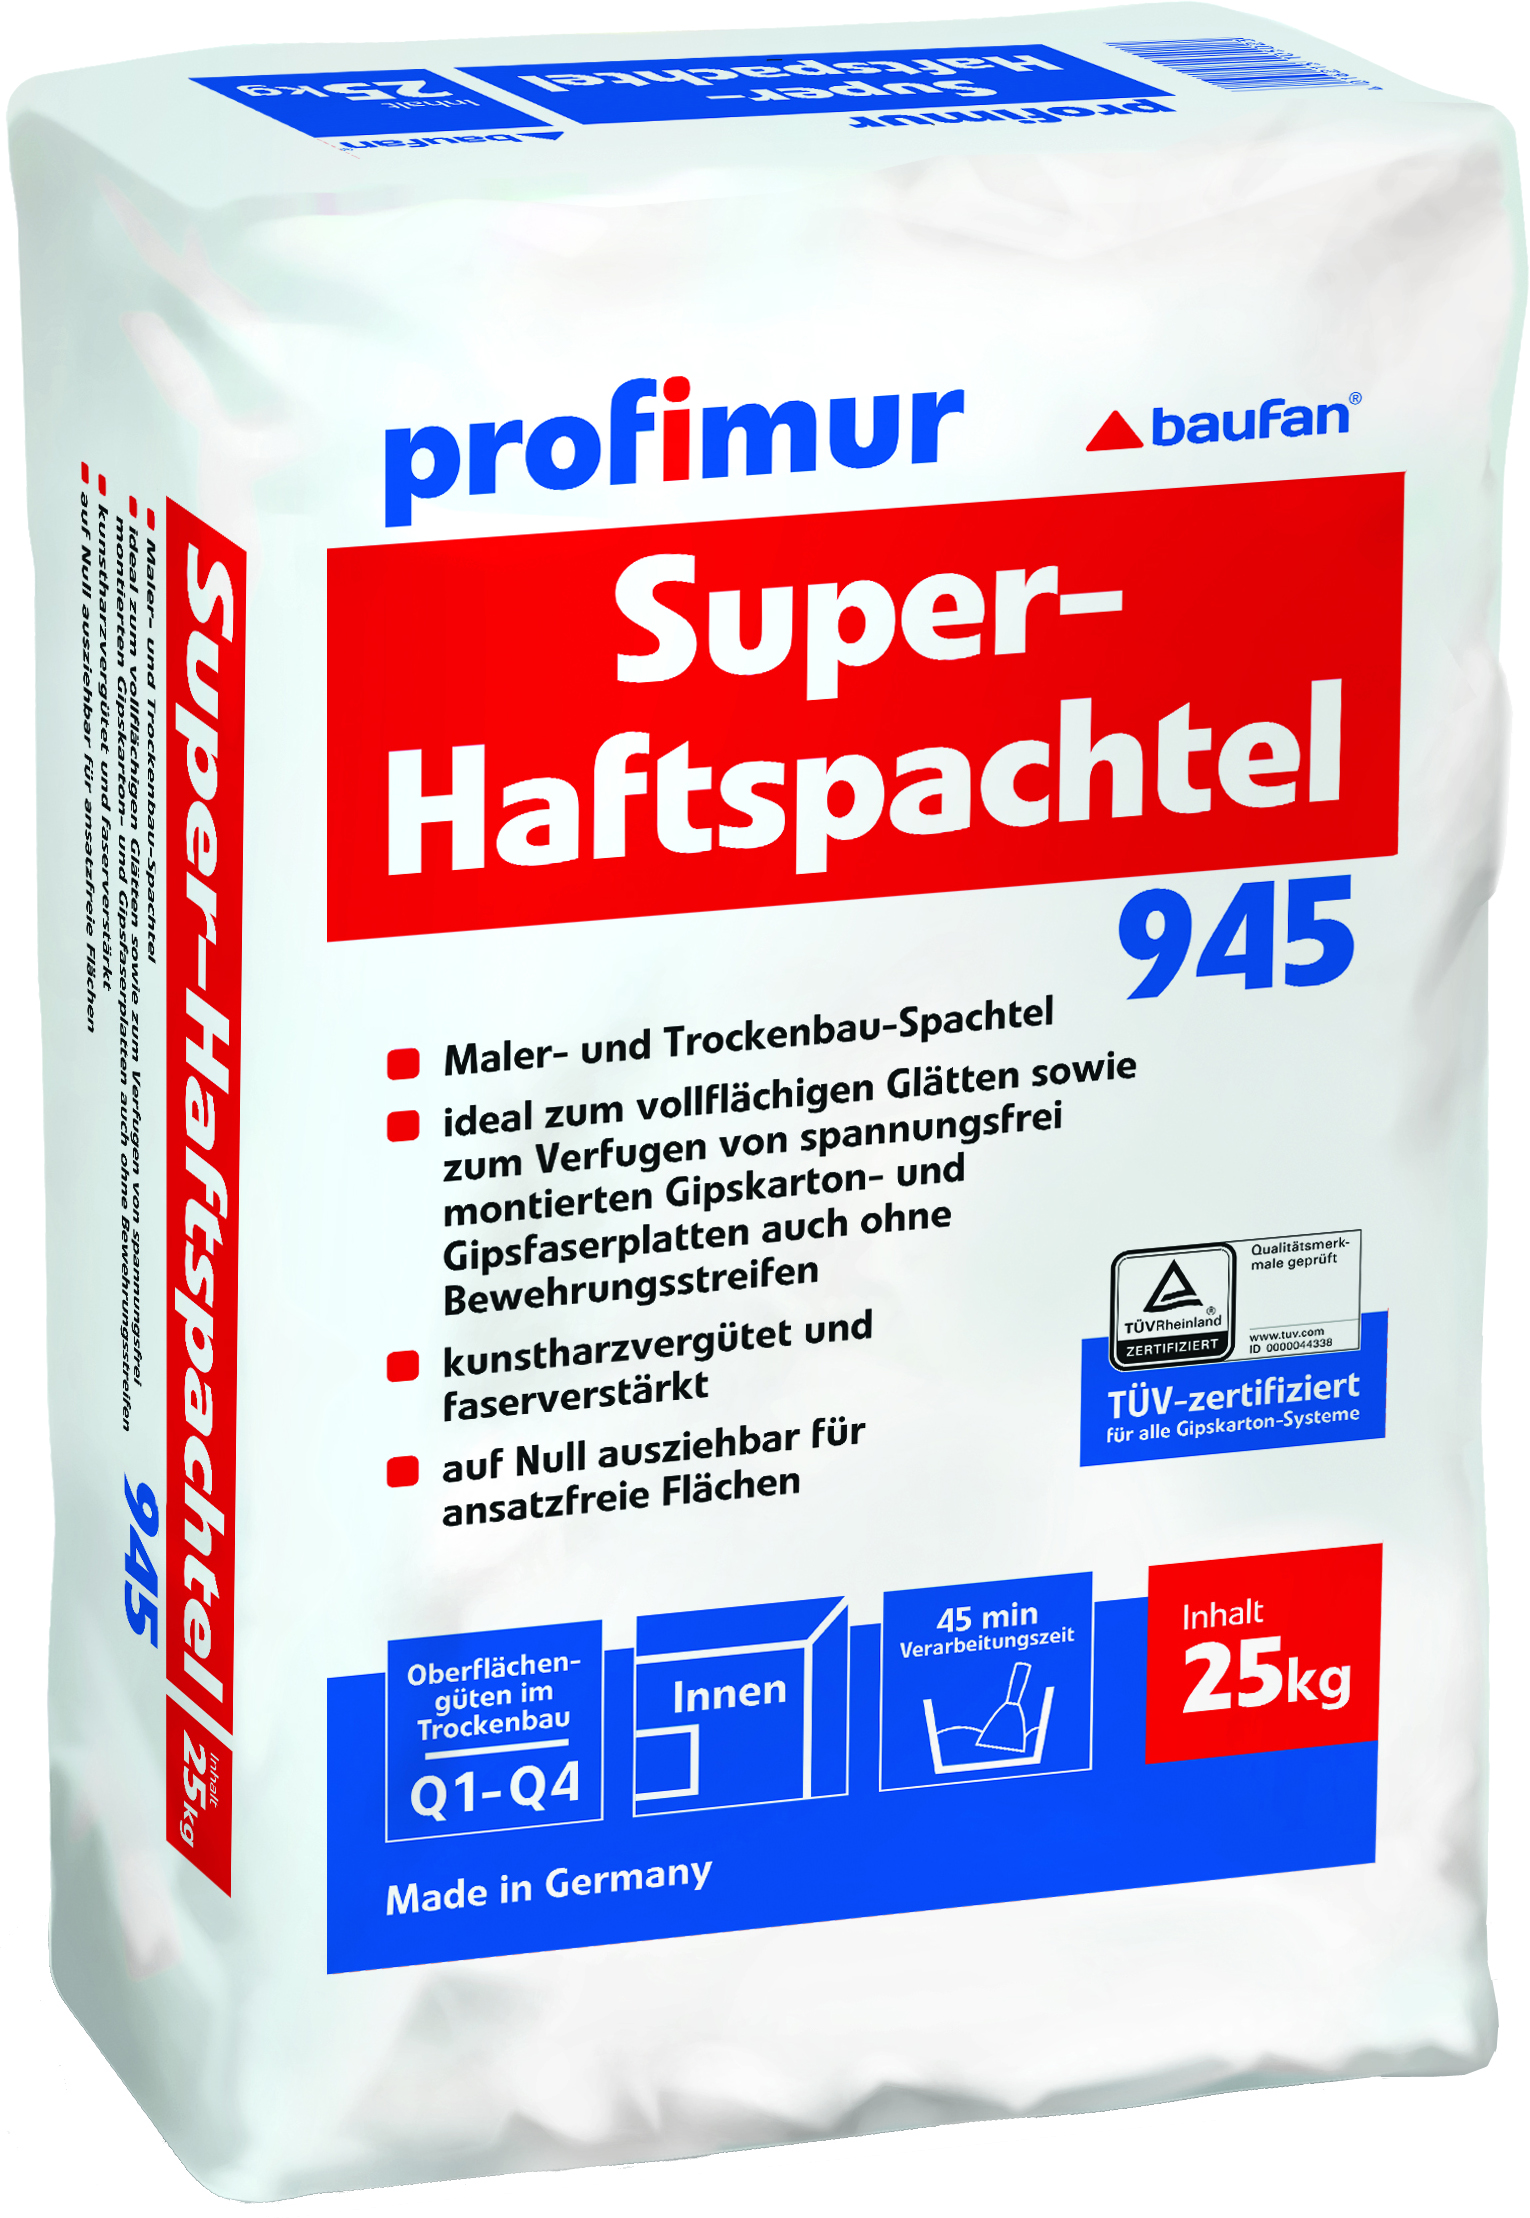 BAUFAN BAUCHEMIE Super-Haftspachtel Profimur 945 25kg baufan